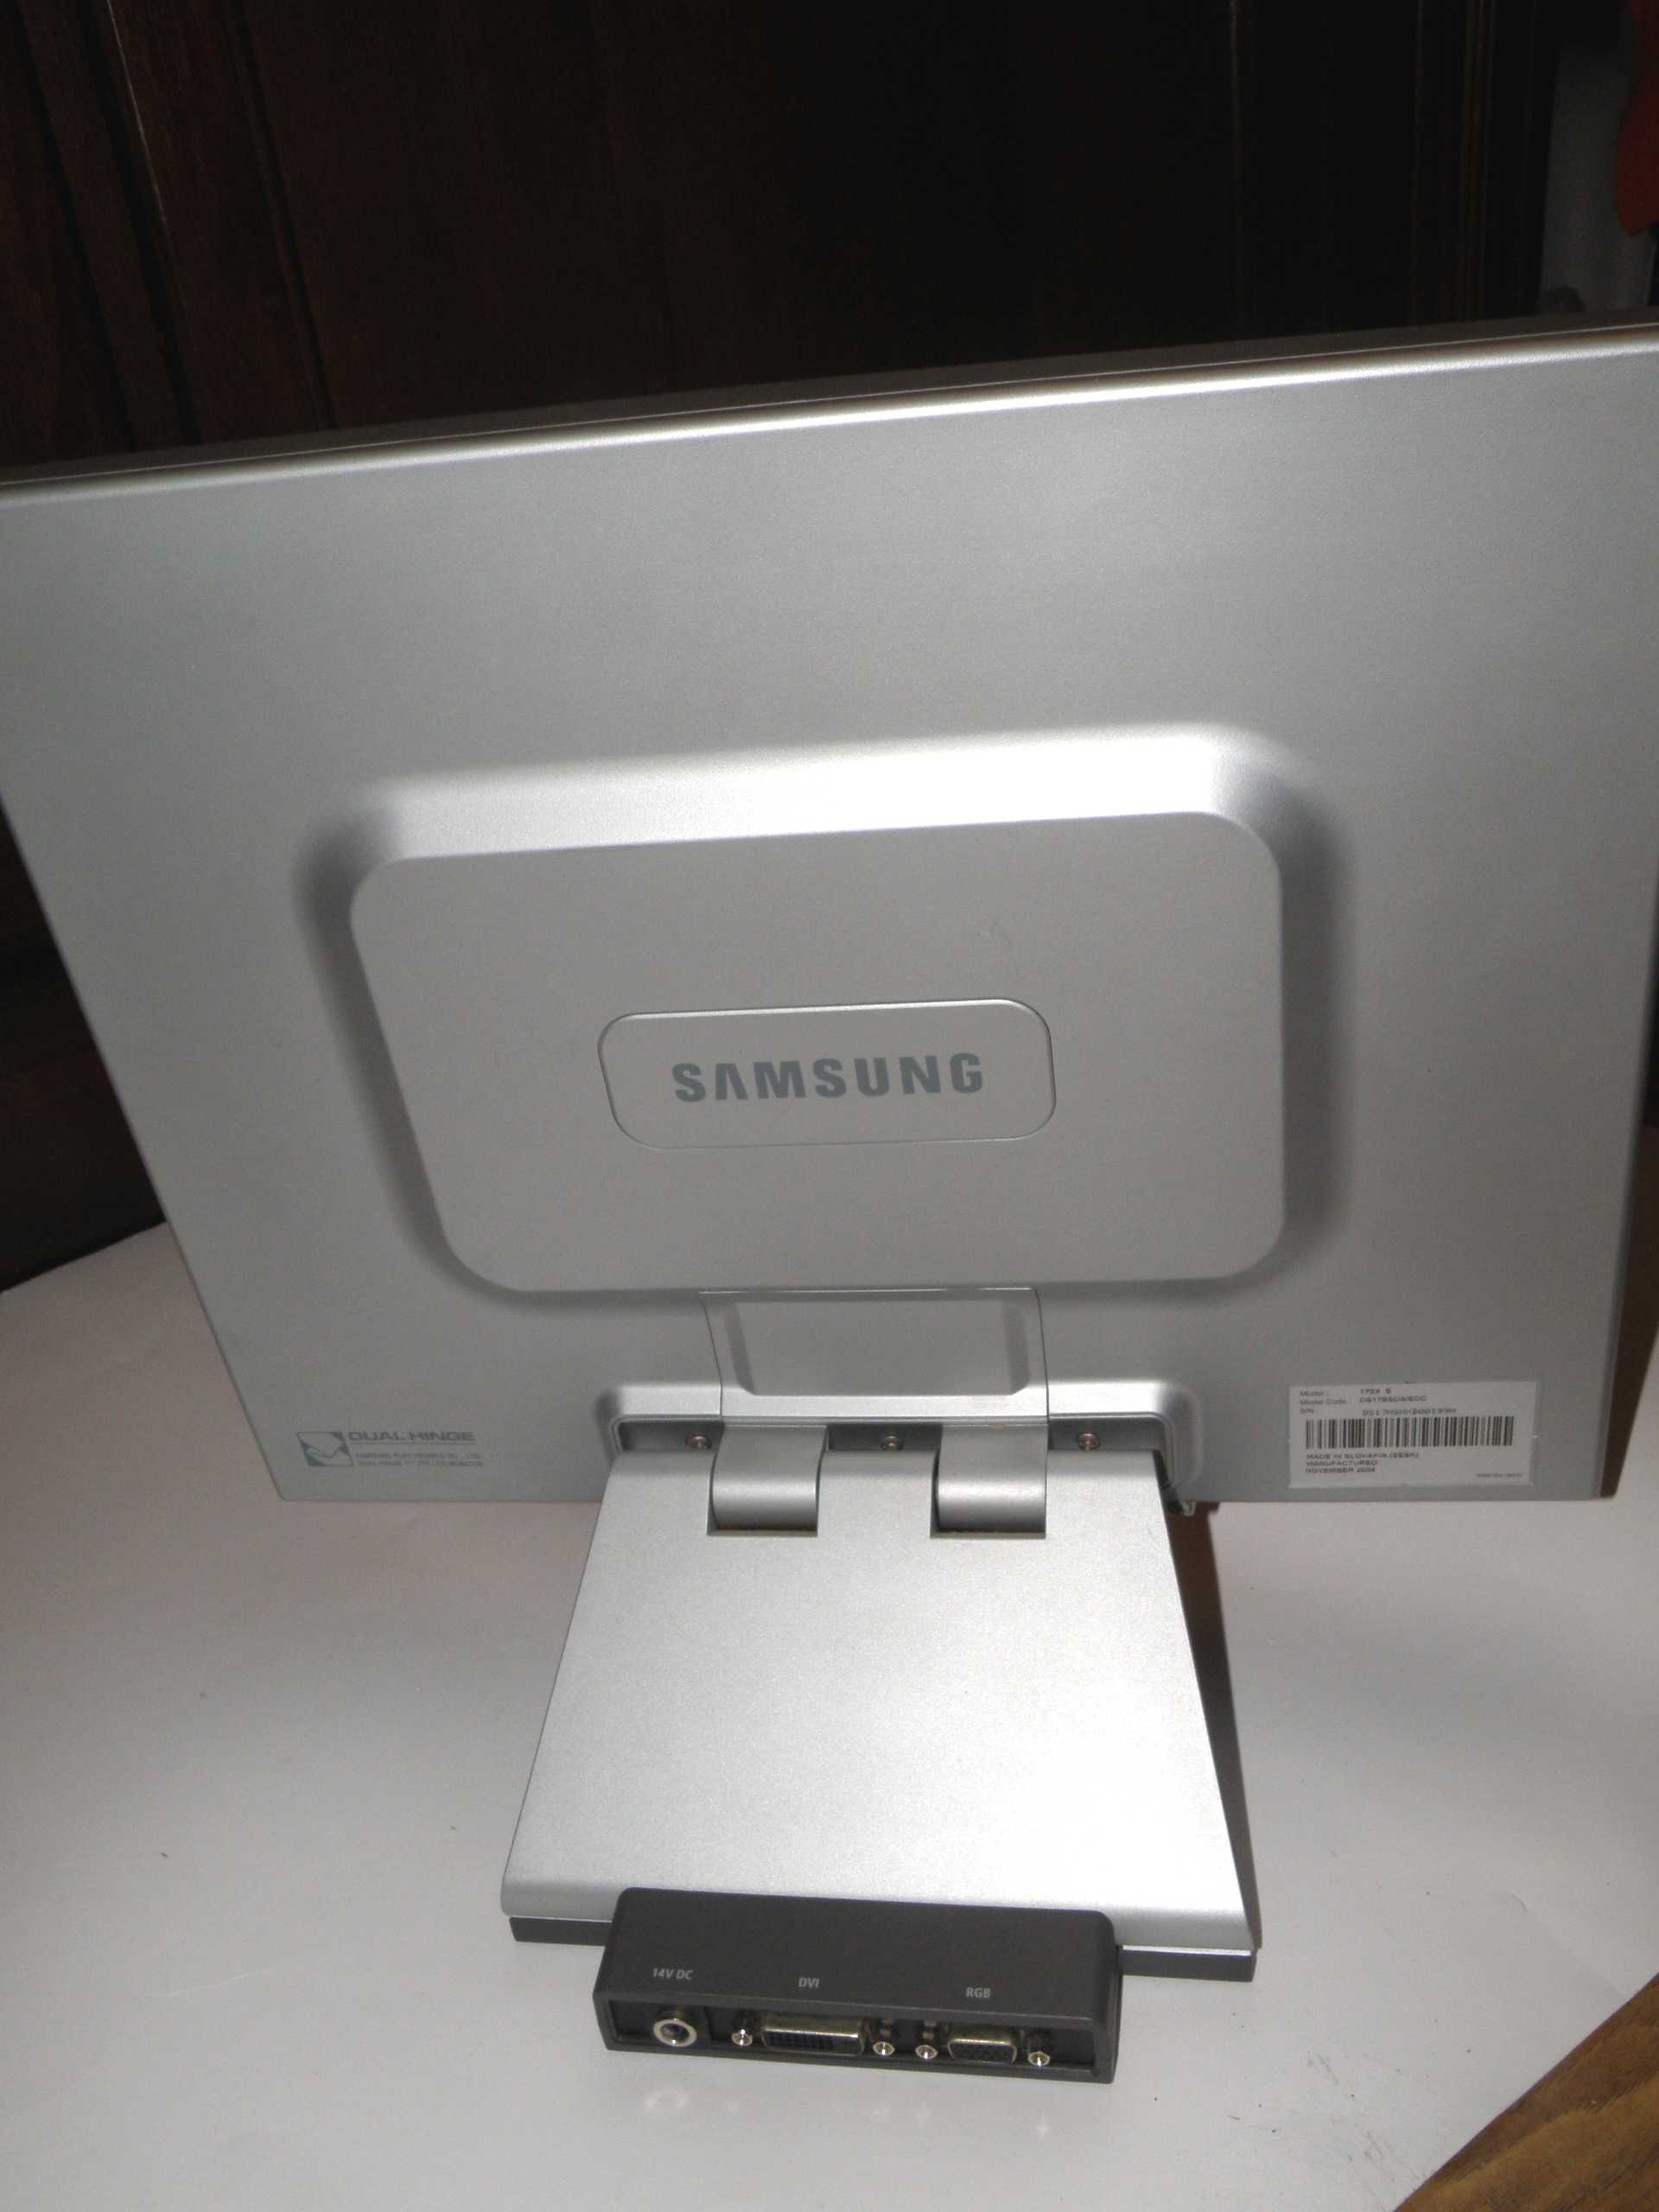 Samsung 172X S монитор неисправный, битая матрица